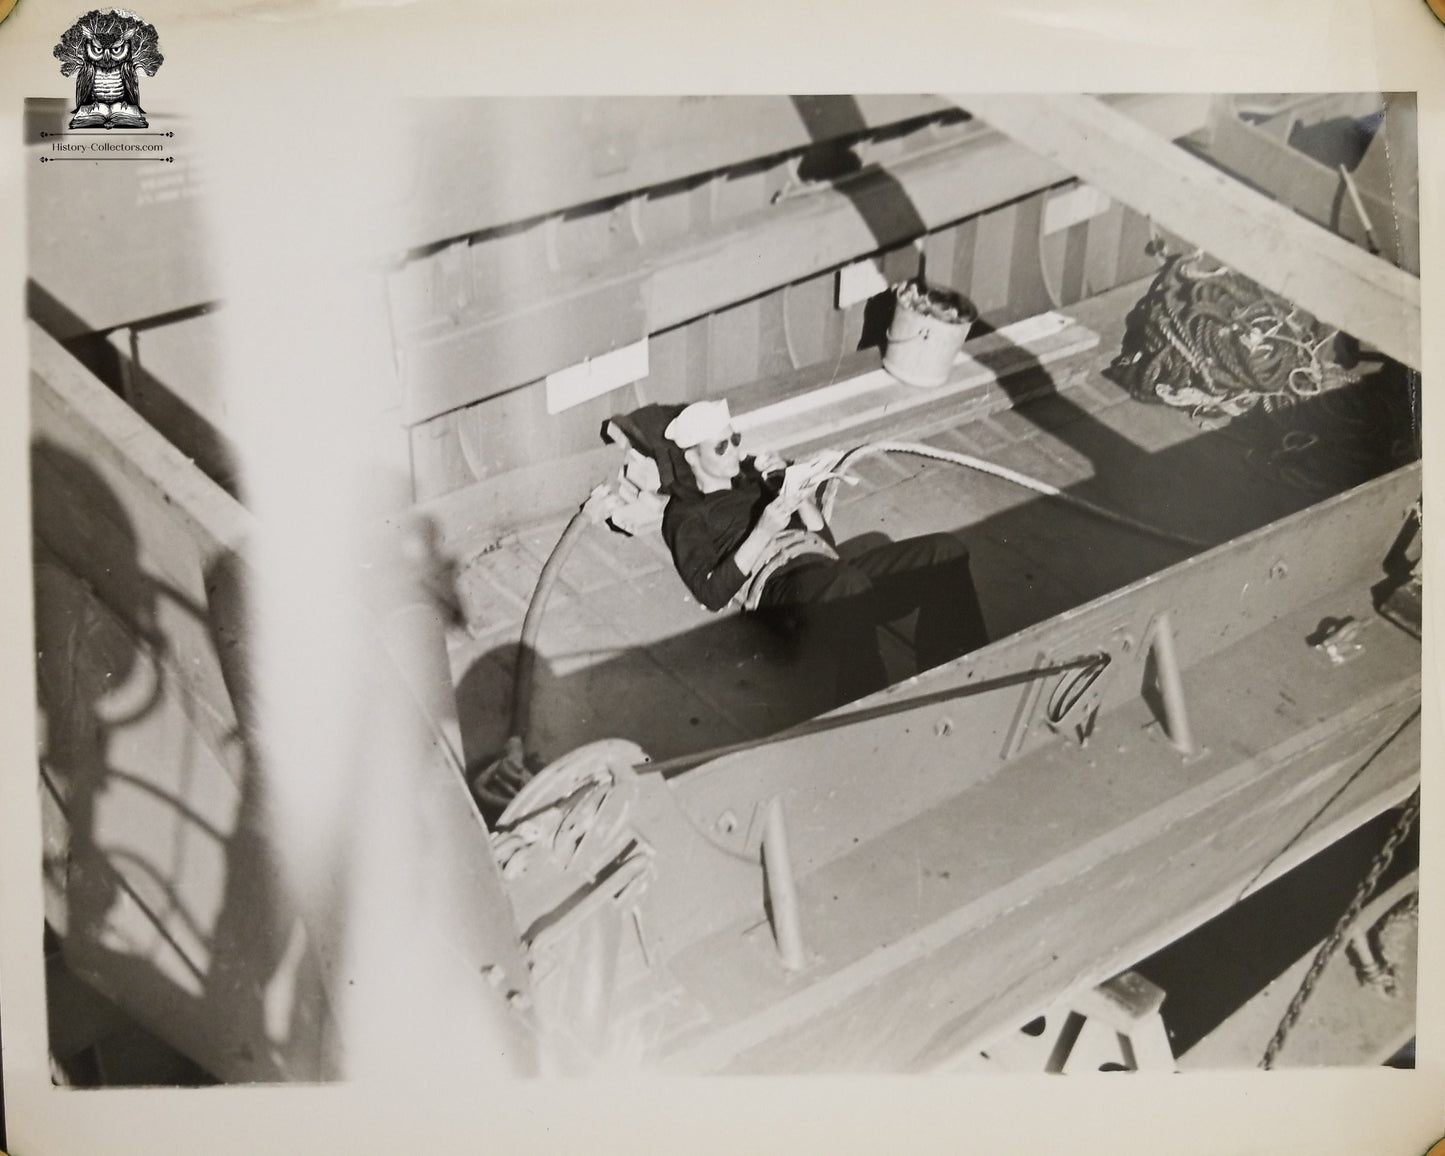 c1940s WWII Era United States Navy USN Sailor Reading Relaxing Taking A Break Inside LCVP Higgins Landing Boat Craft Photograph